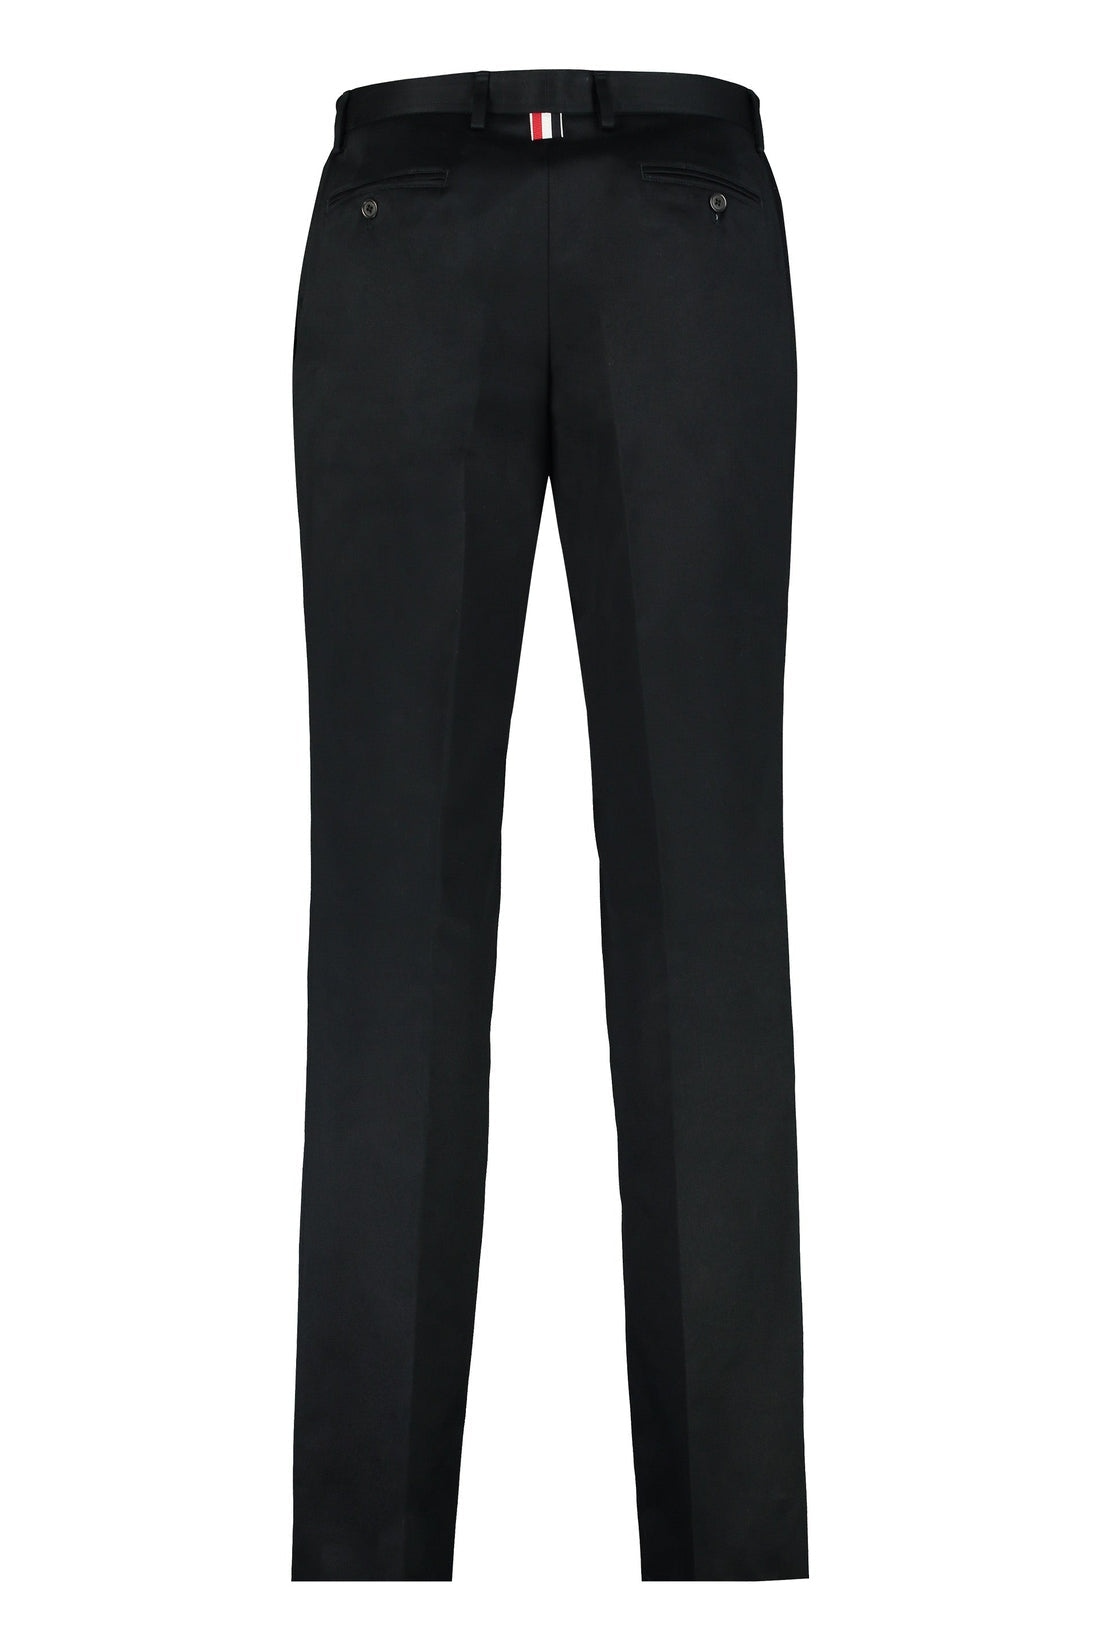 Thom Browne-OUTLET-SALE-Cotton gabardine trousers-ARCHIVIST